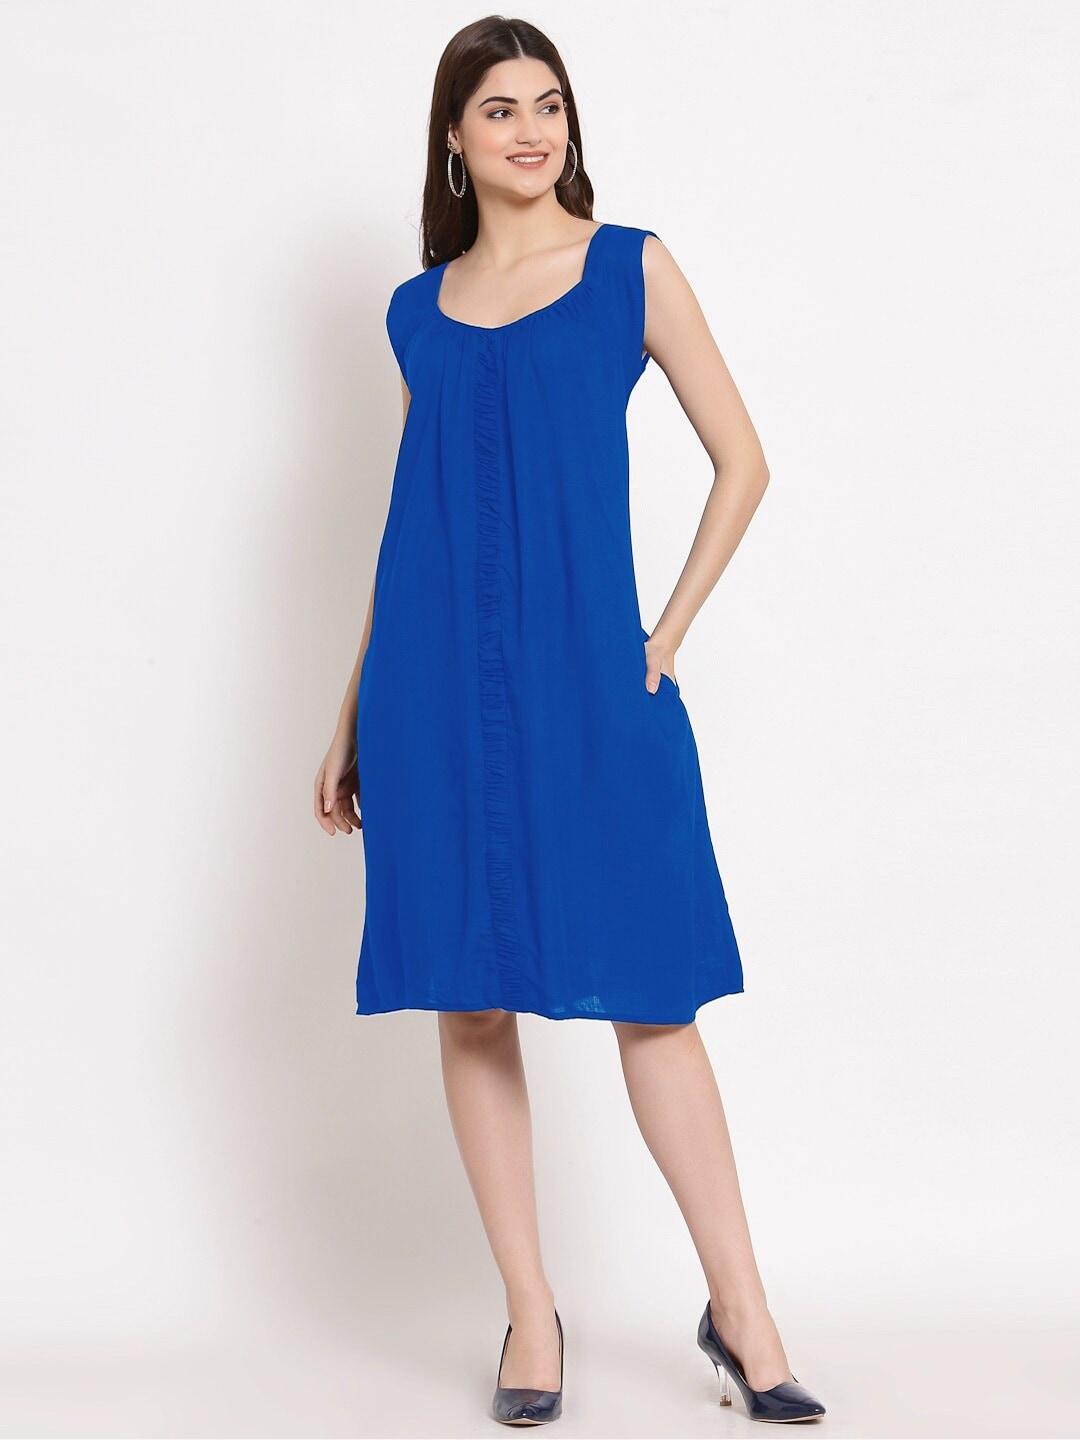 patrorna-women-blue-nightdress